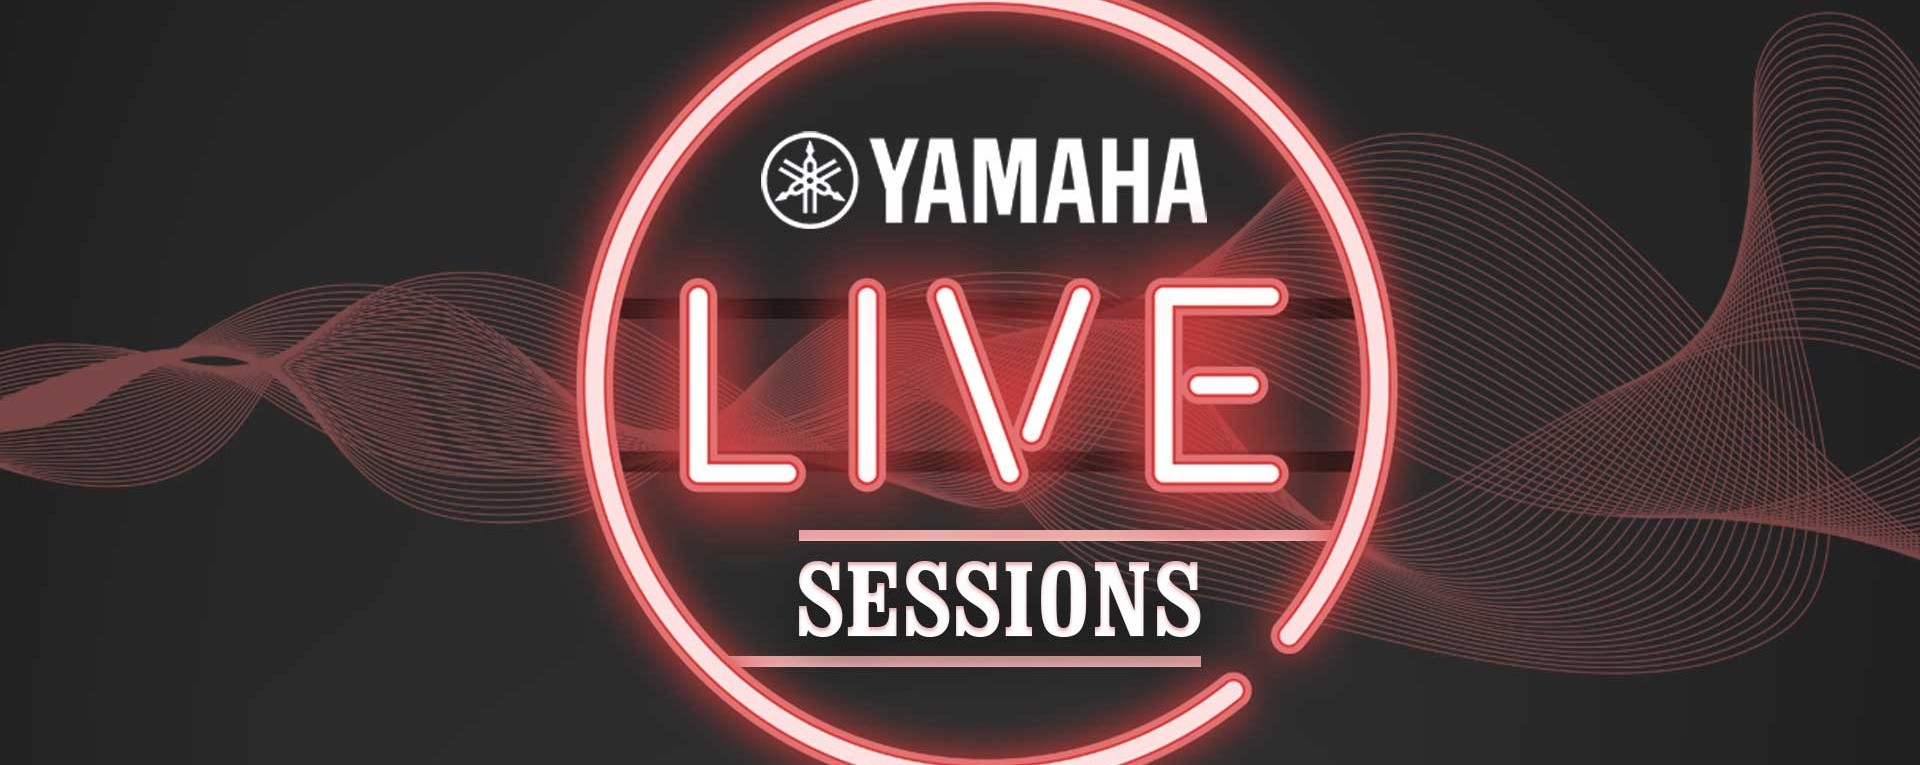 Yamaha Live Sessions